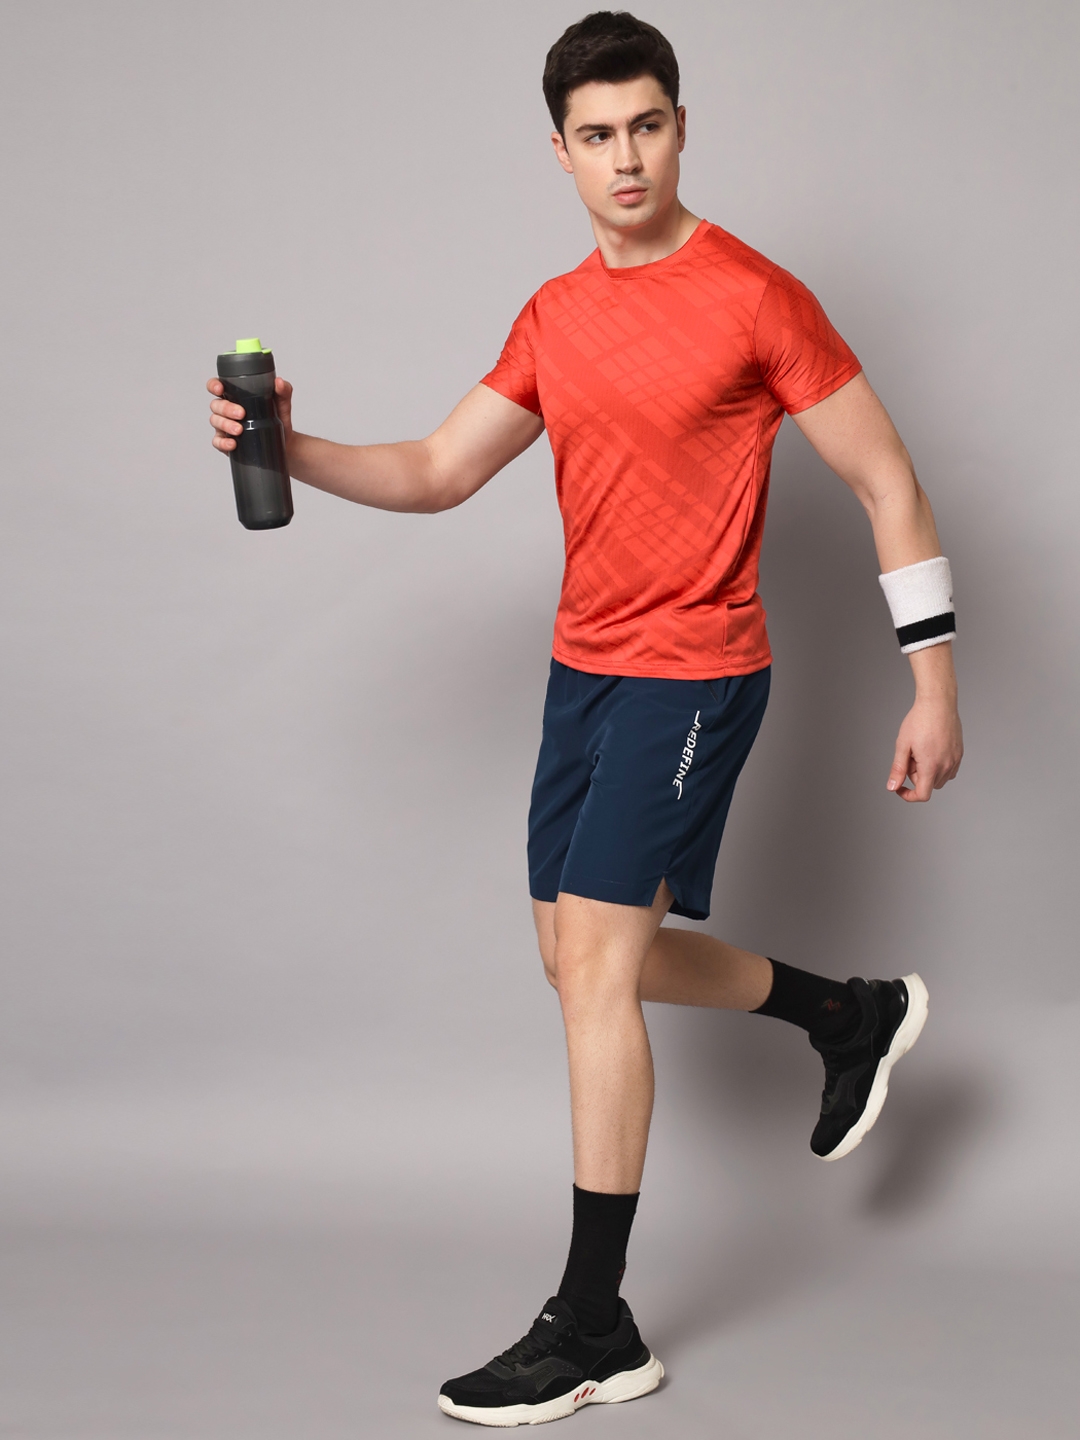 Masch Sports | Masch Sports Men’s Sports Wear, Active Wear, Gym, Running & Training Shorts with Zipped Pockets 1